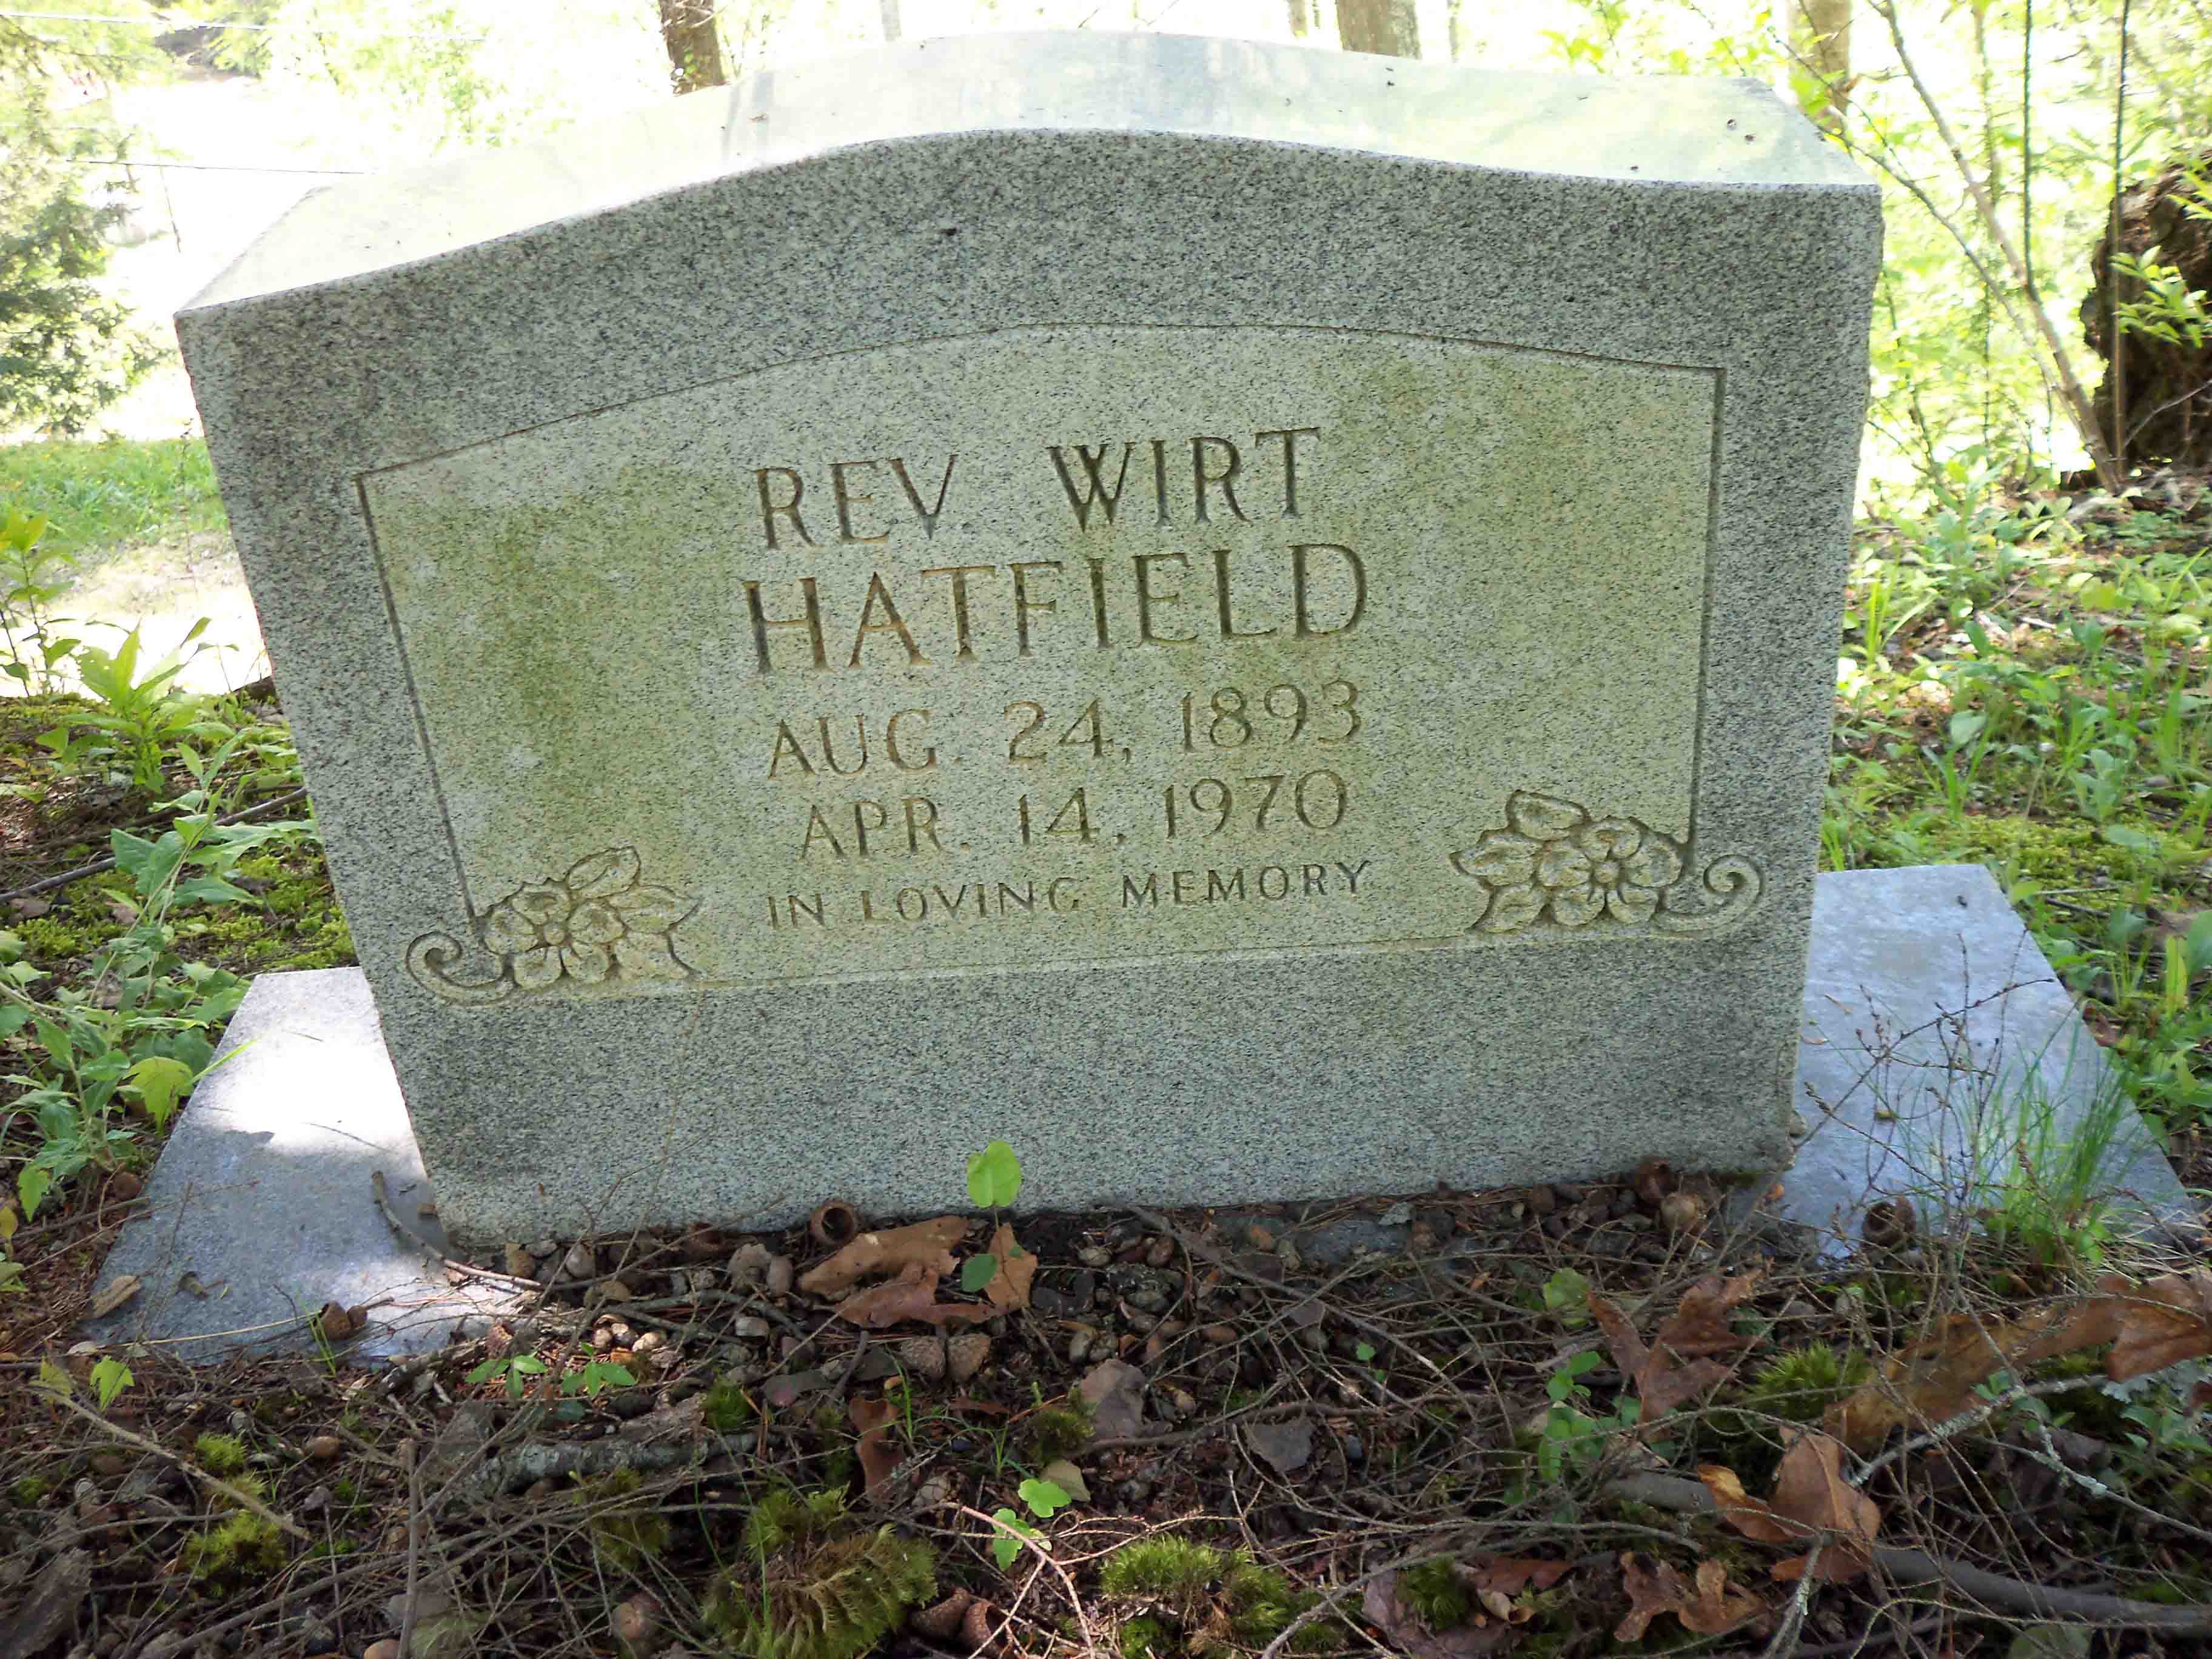 Rev. Wirt Hatfield, WV